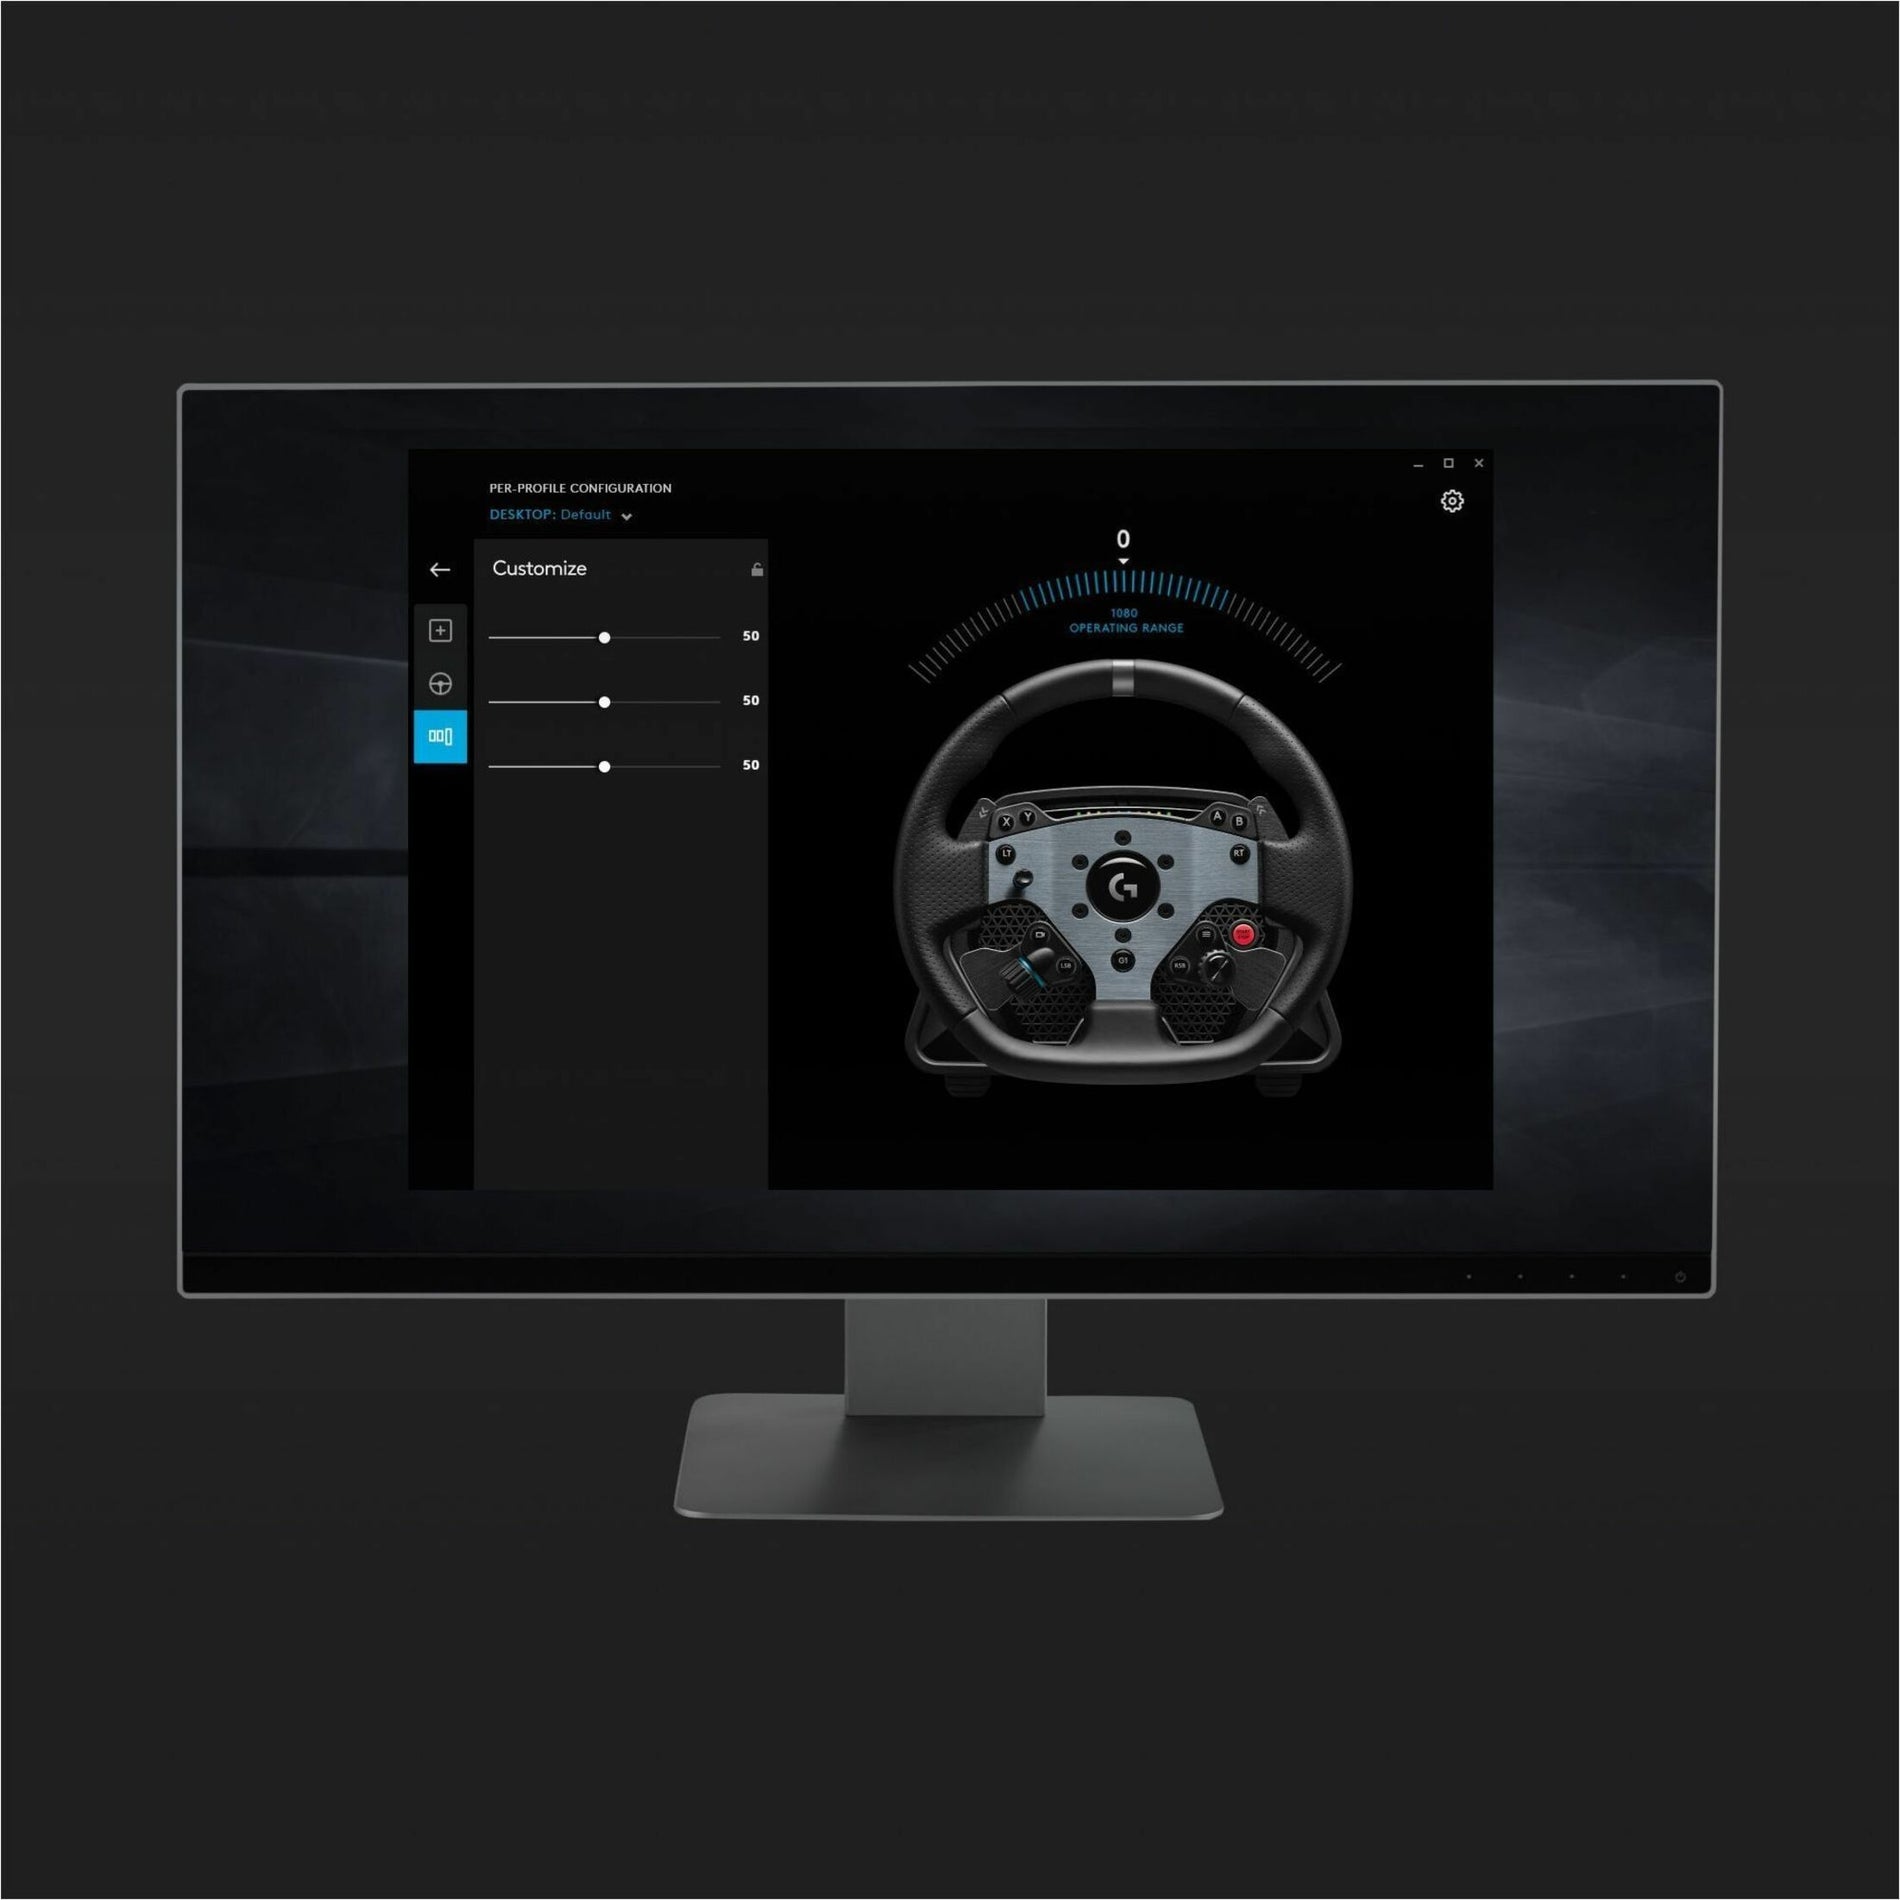 Logitech G 941-000215 Pro Racing Wheel, USB PC Gaming Steering Wheel